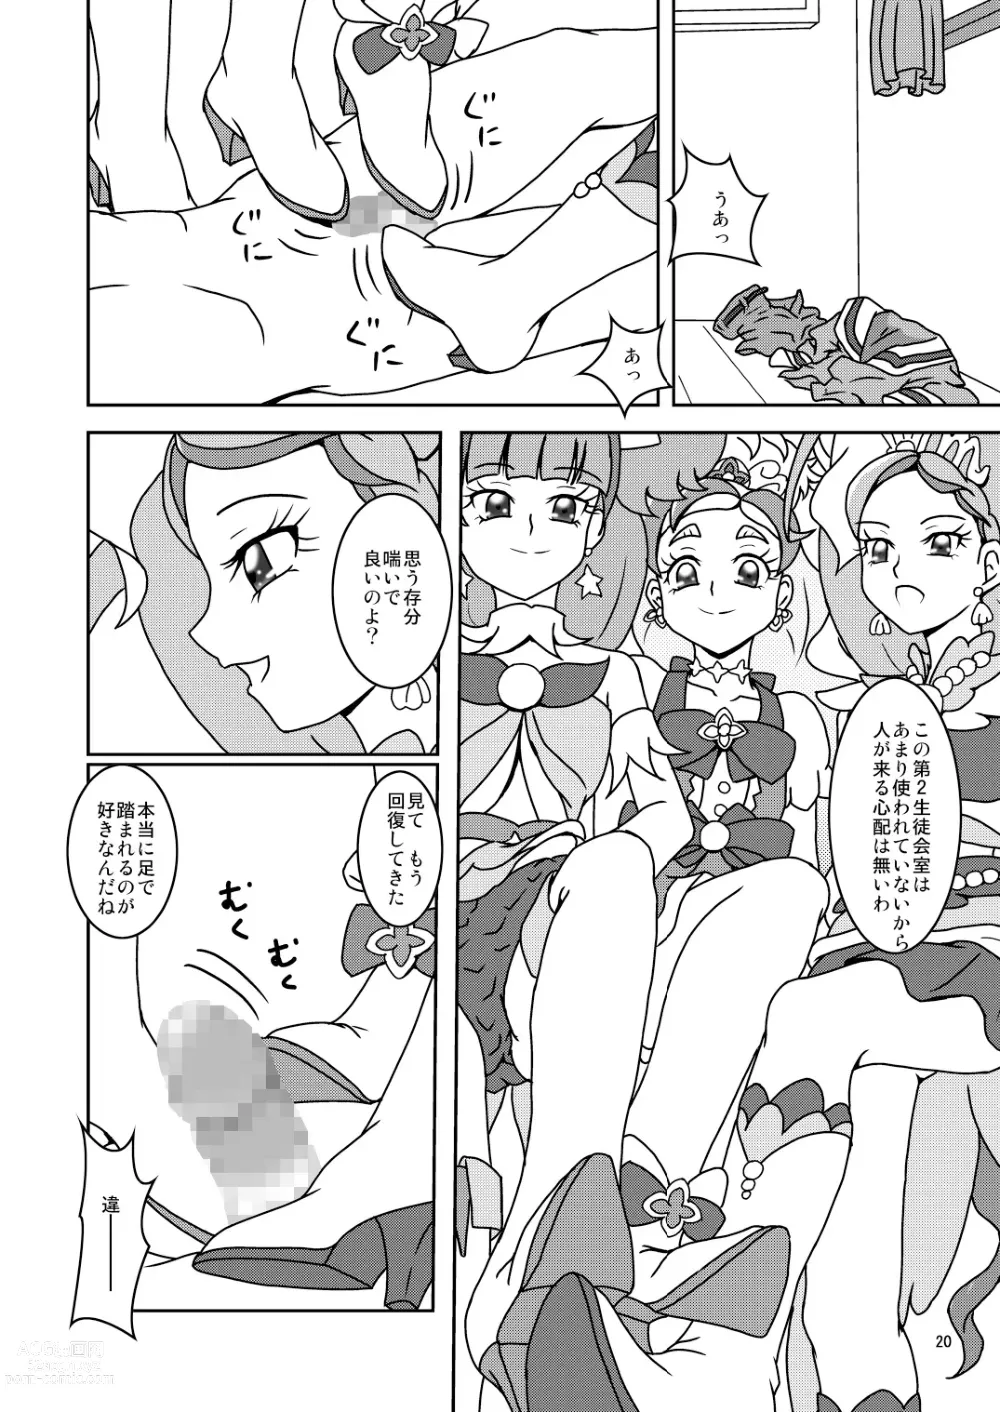 Page 22 of doujinshi Go! Princess Zuricure